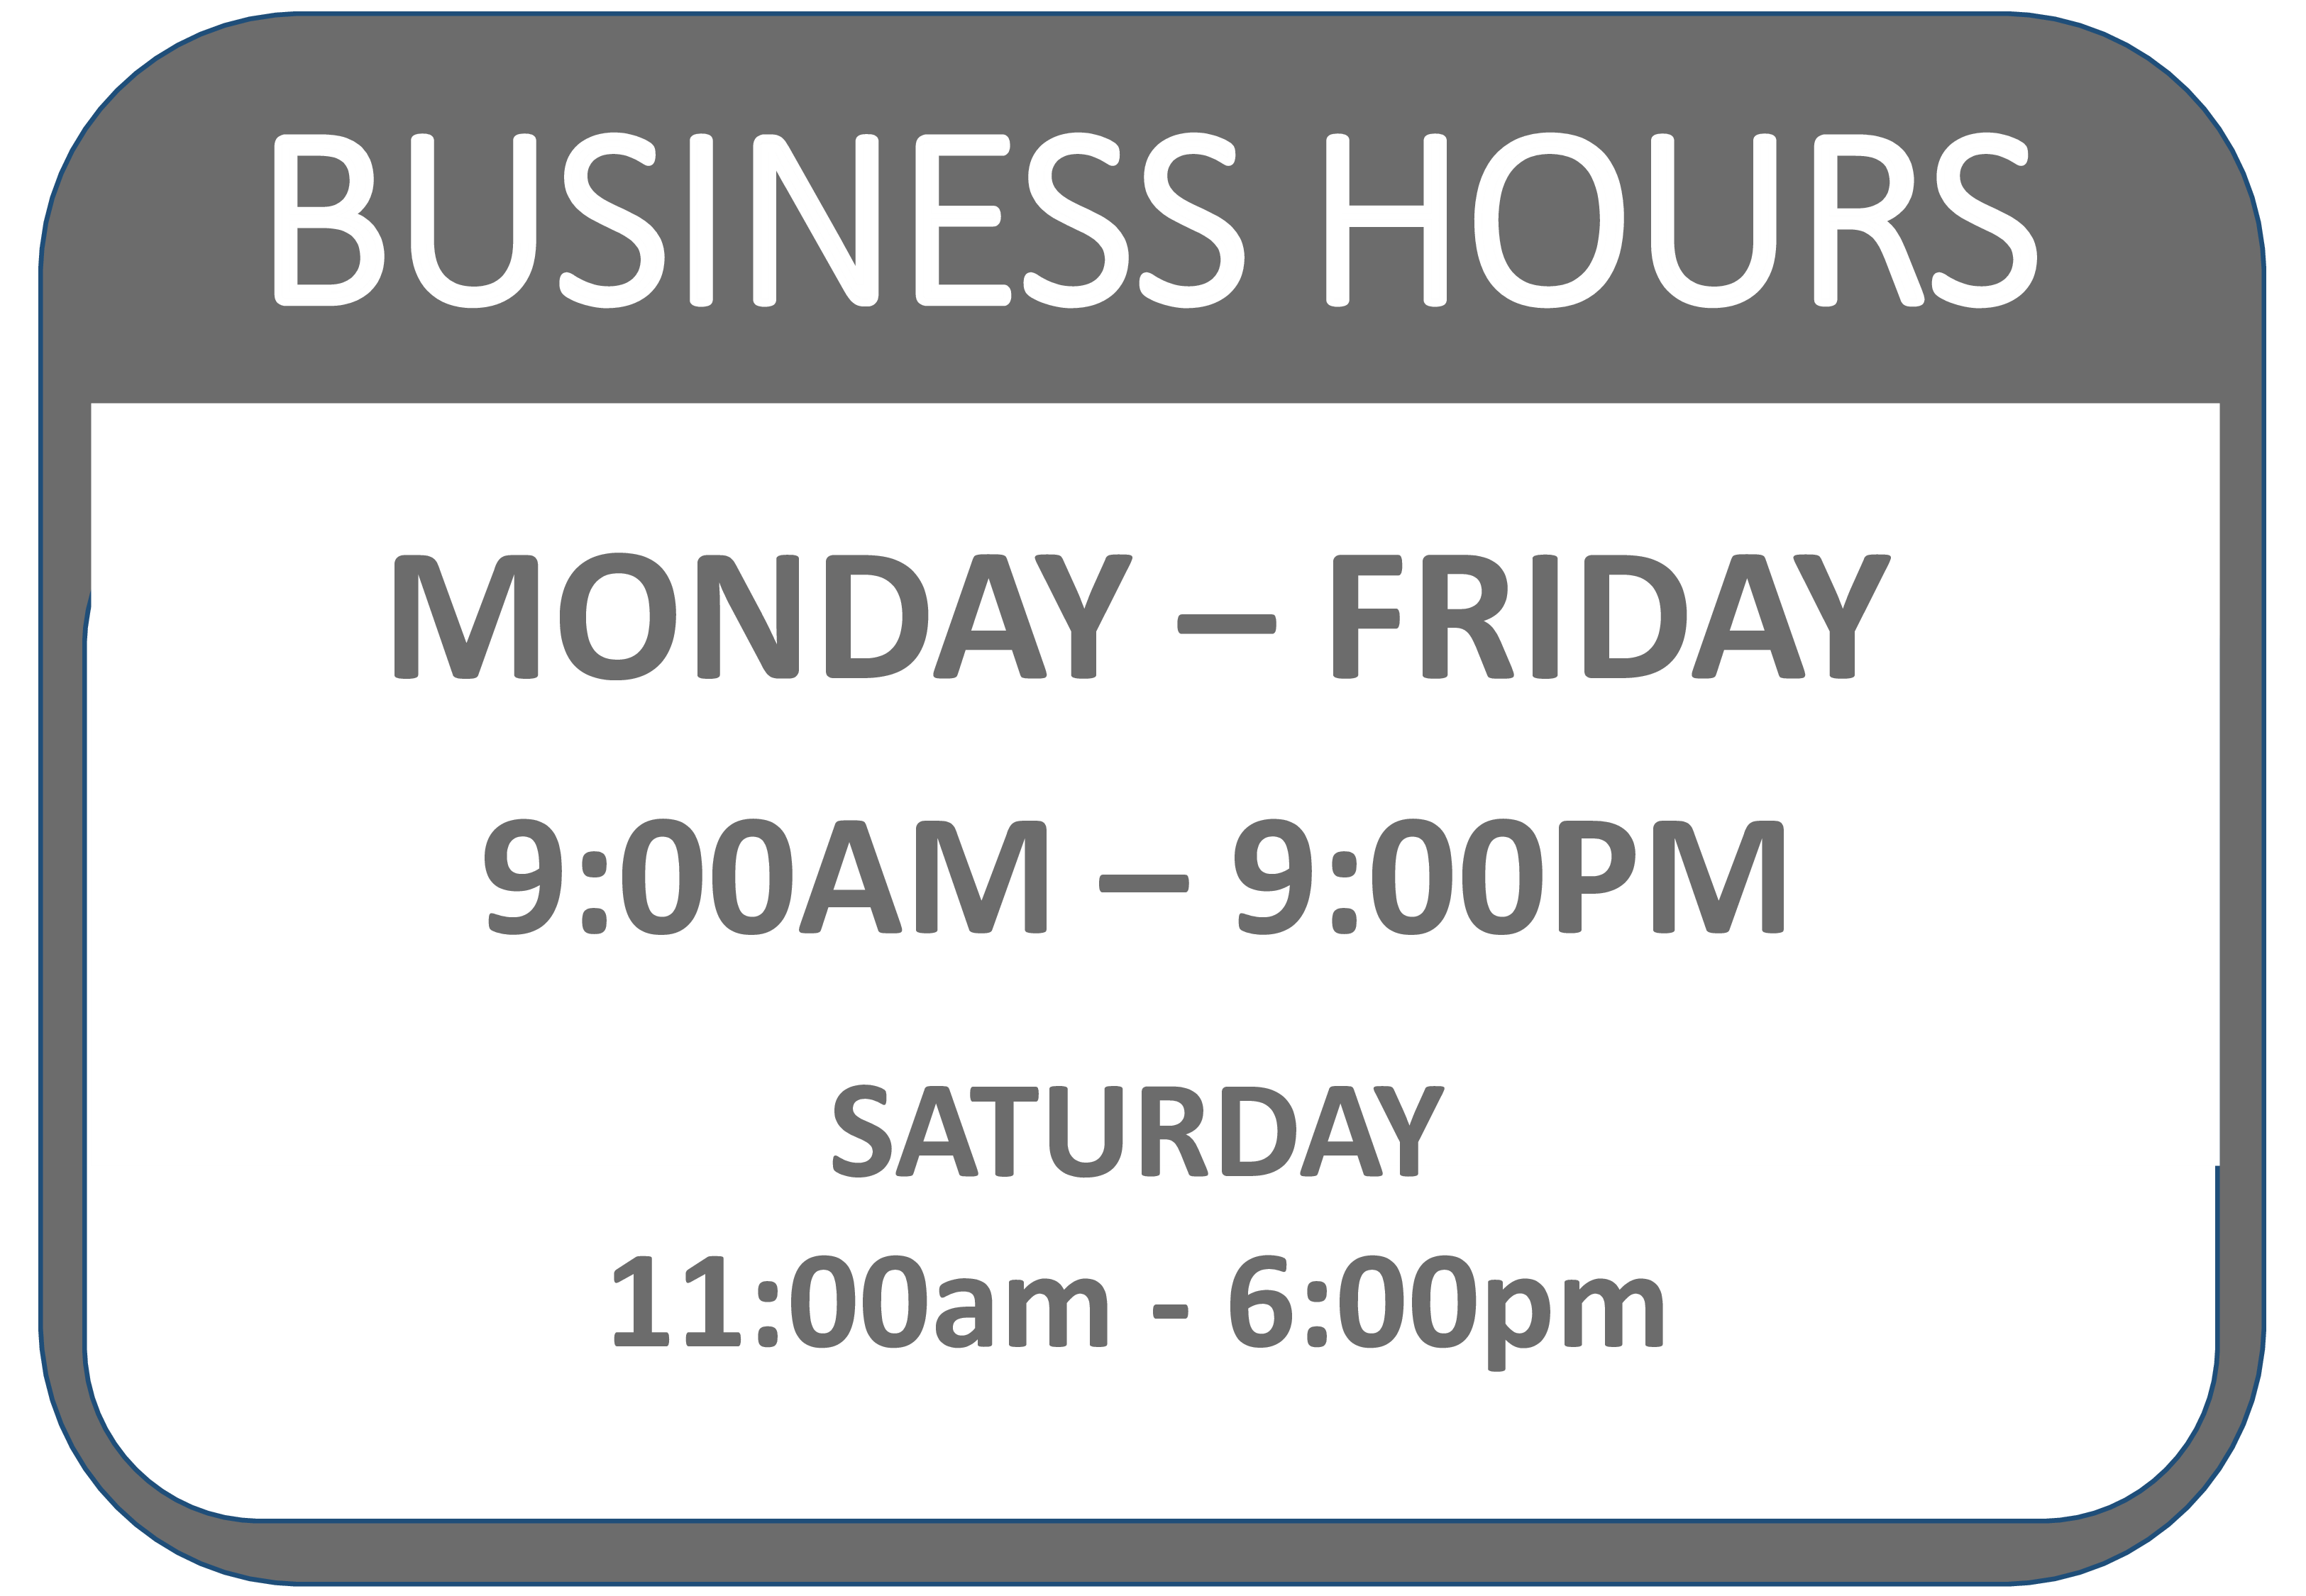 Business Hours Signage main image